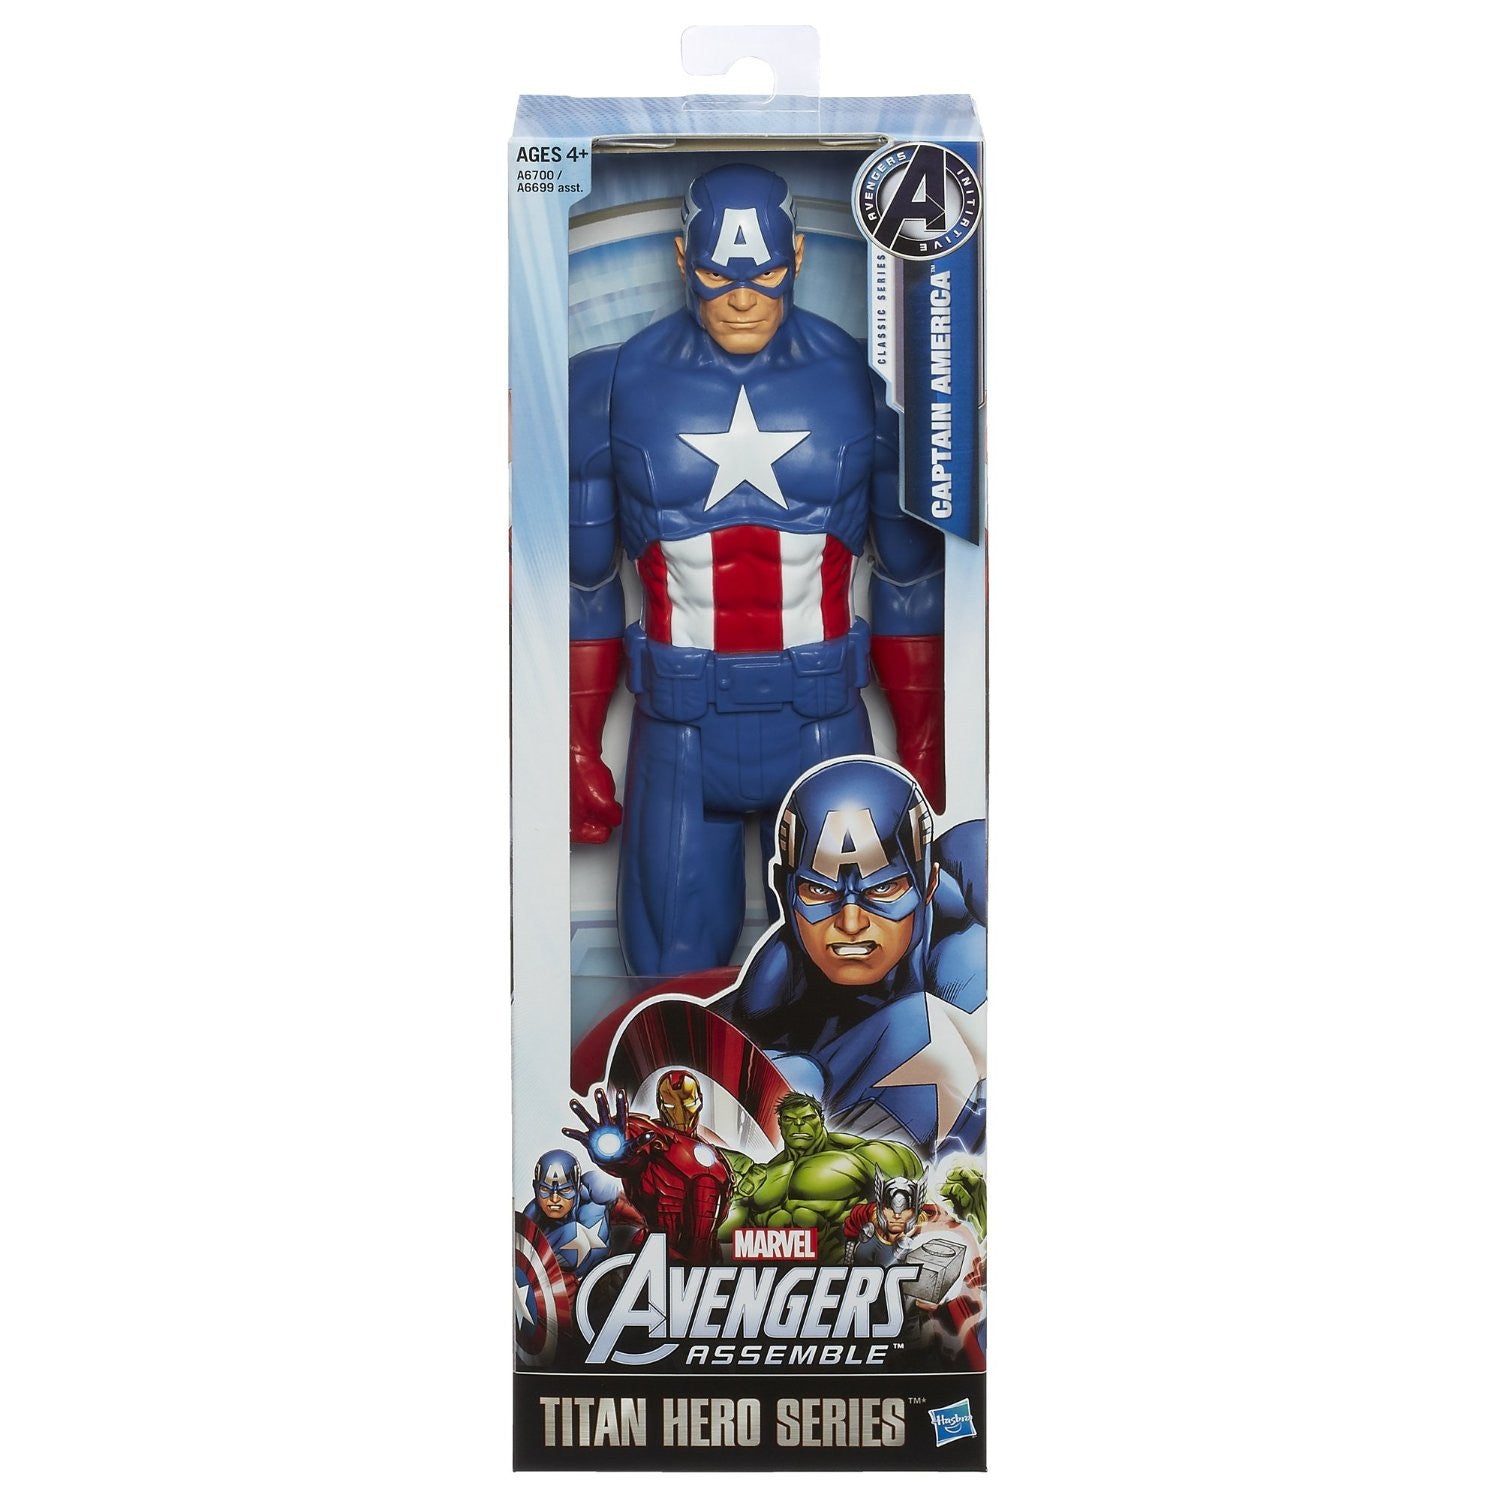 Marvel Avengers Assemble Titan Hero Series Captain America Figure, 12-Inch